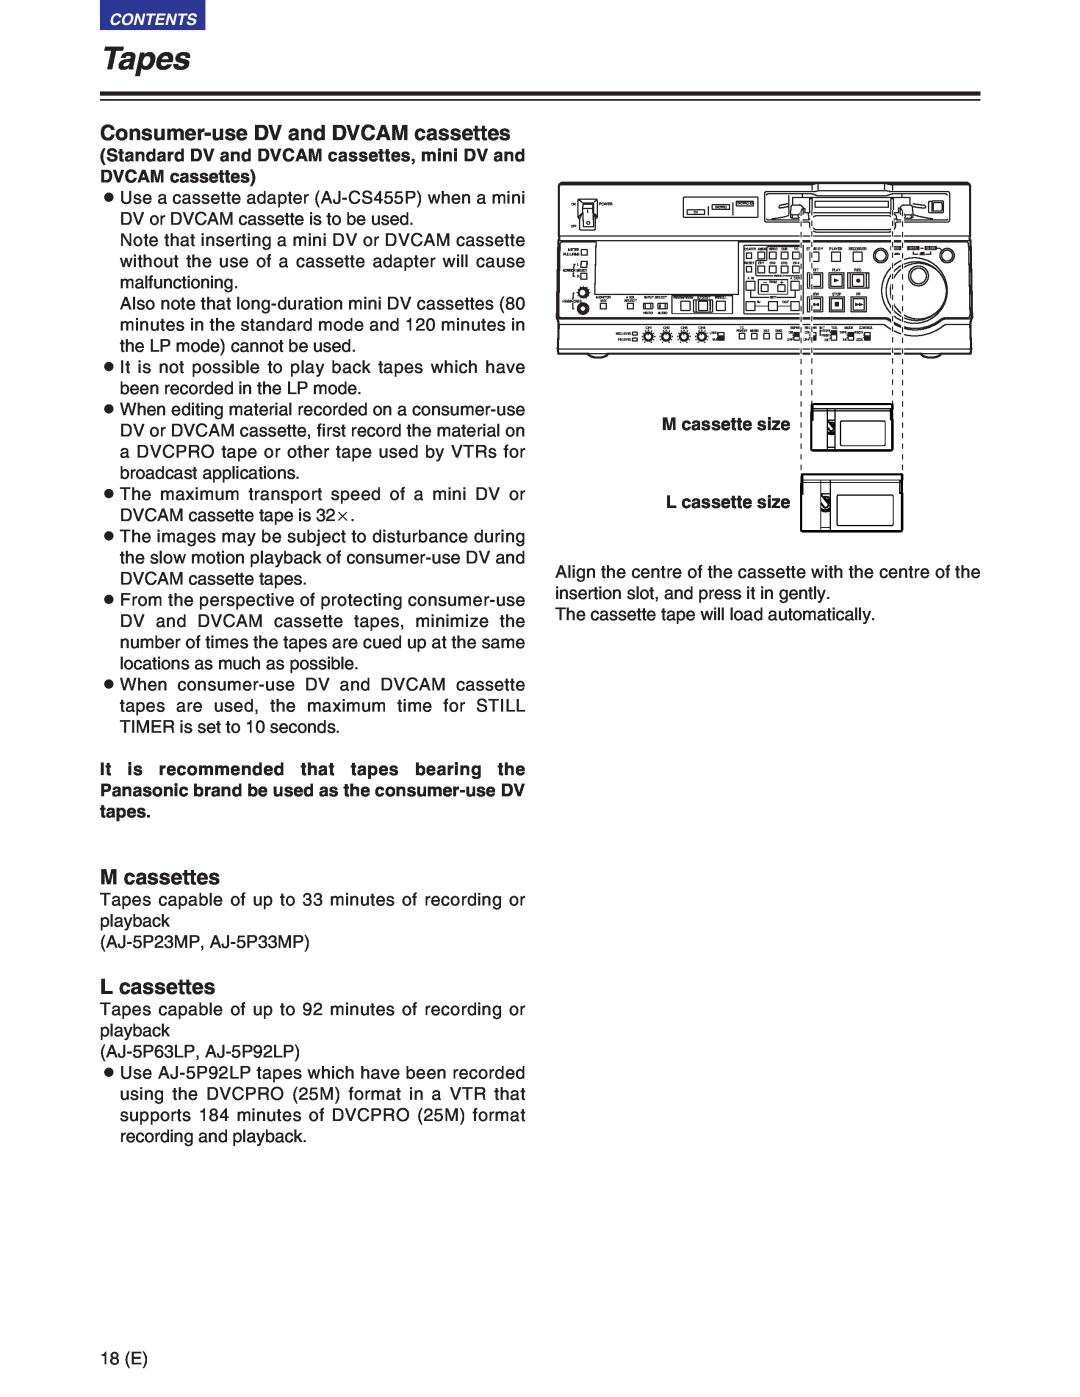 Panasonic AJ-SD930BE, AJ-SD955BE manual Tapes, Consumer-useDV and DVCAM cassettes, L cassettes 